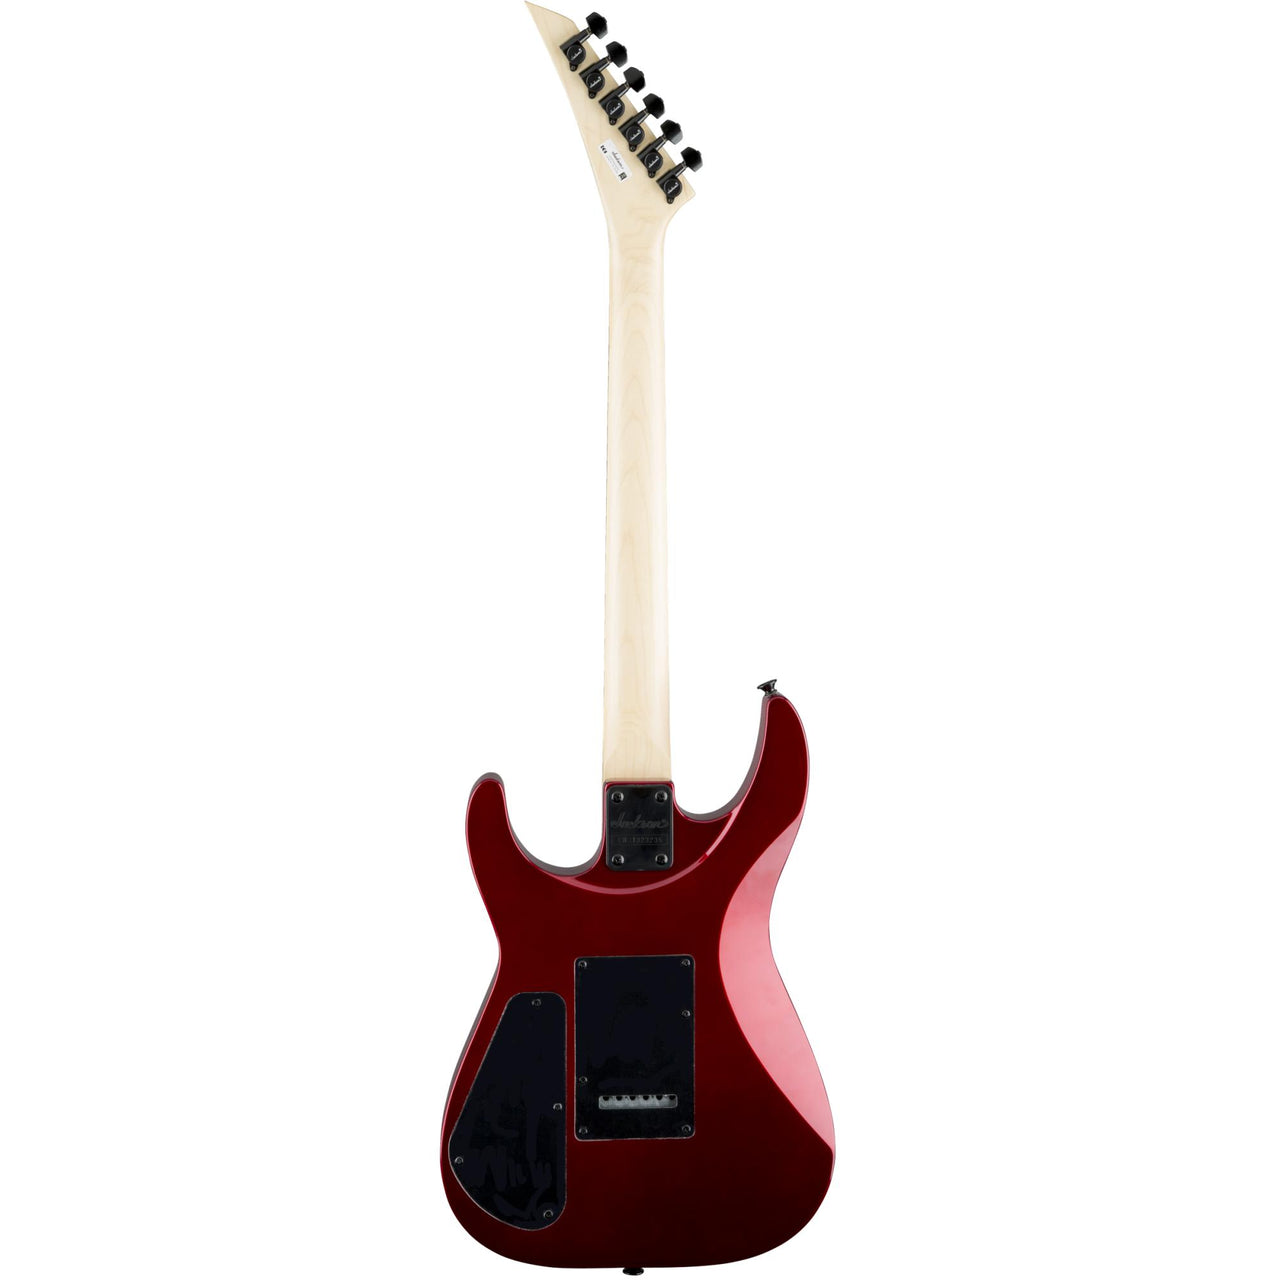 Guitarra Jackson Serie Js12 Dinky Electrica Metallic Red 2910112552